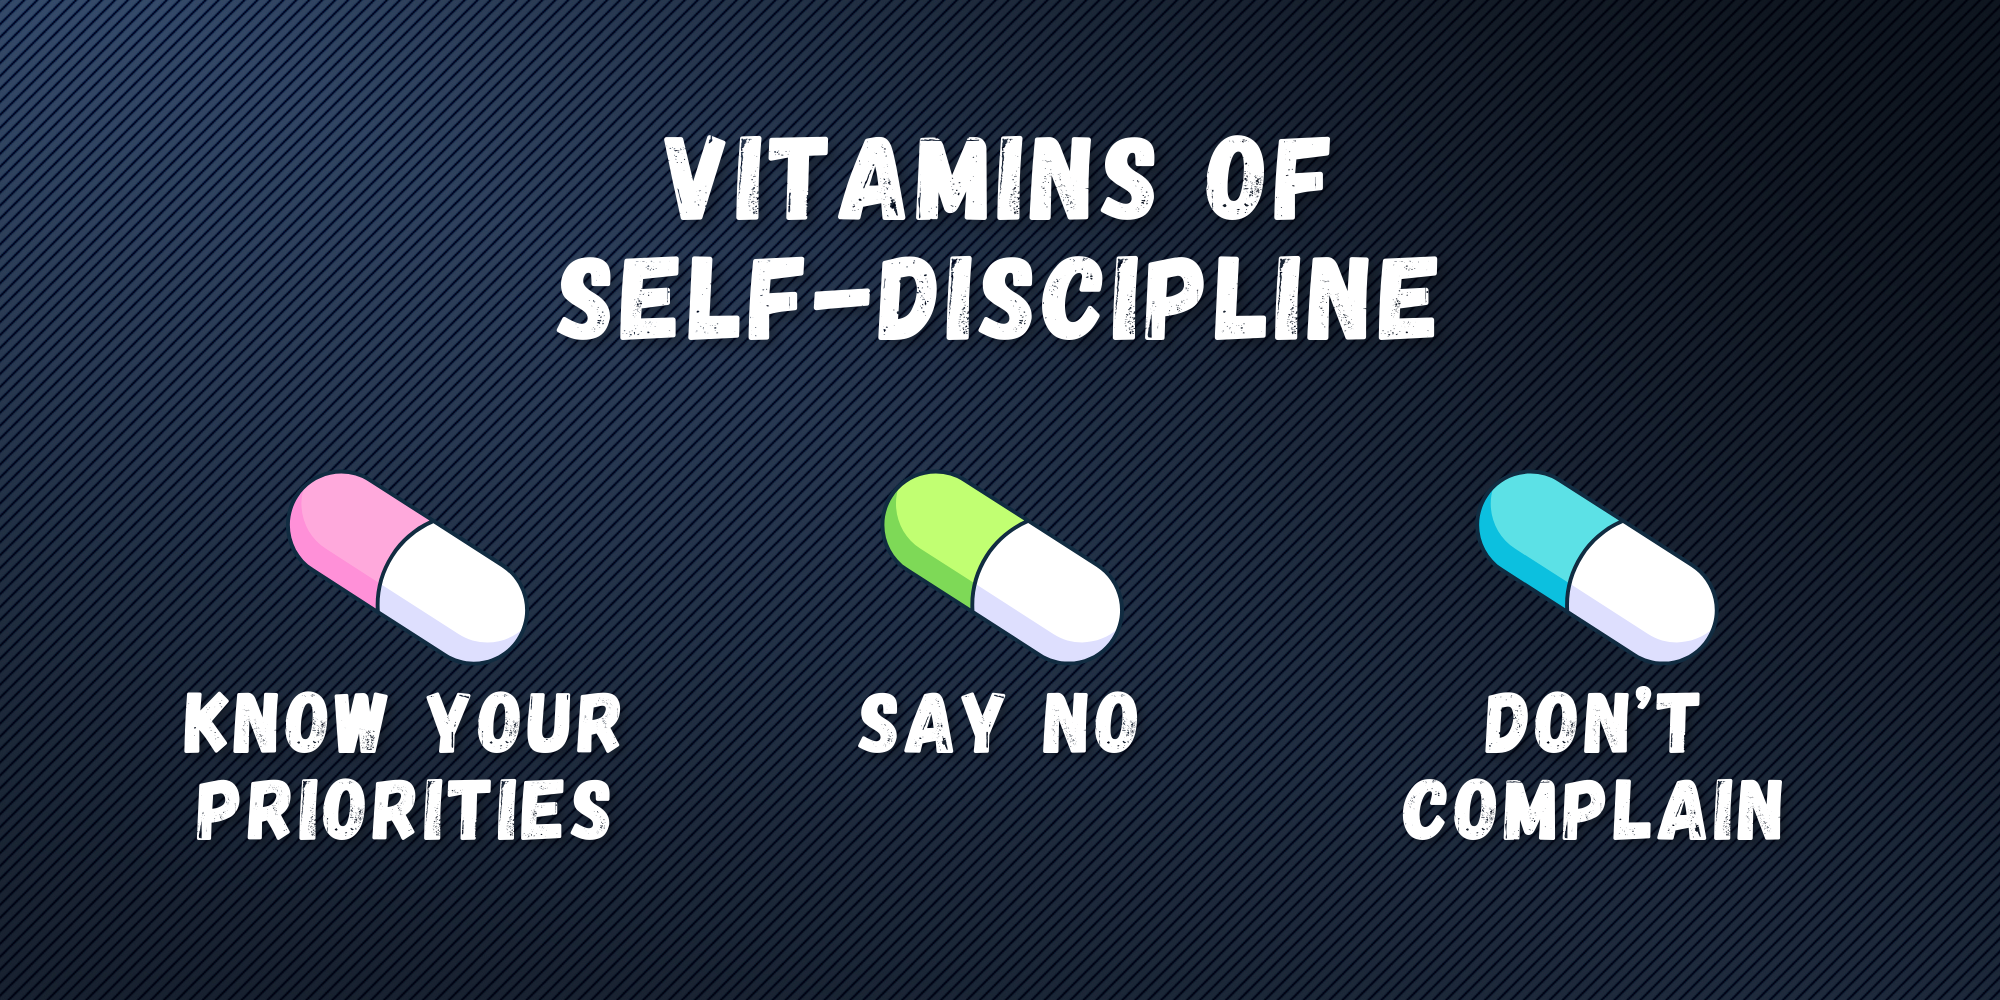 How to develop self-discipline